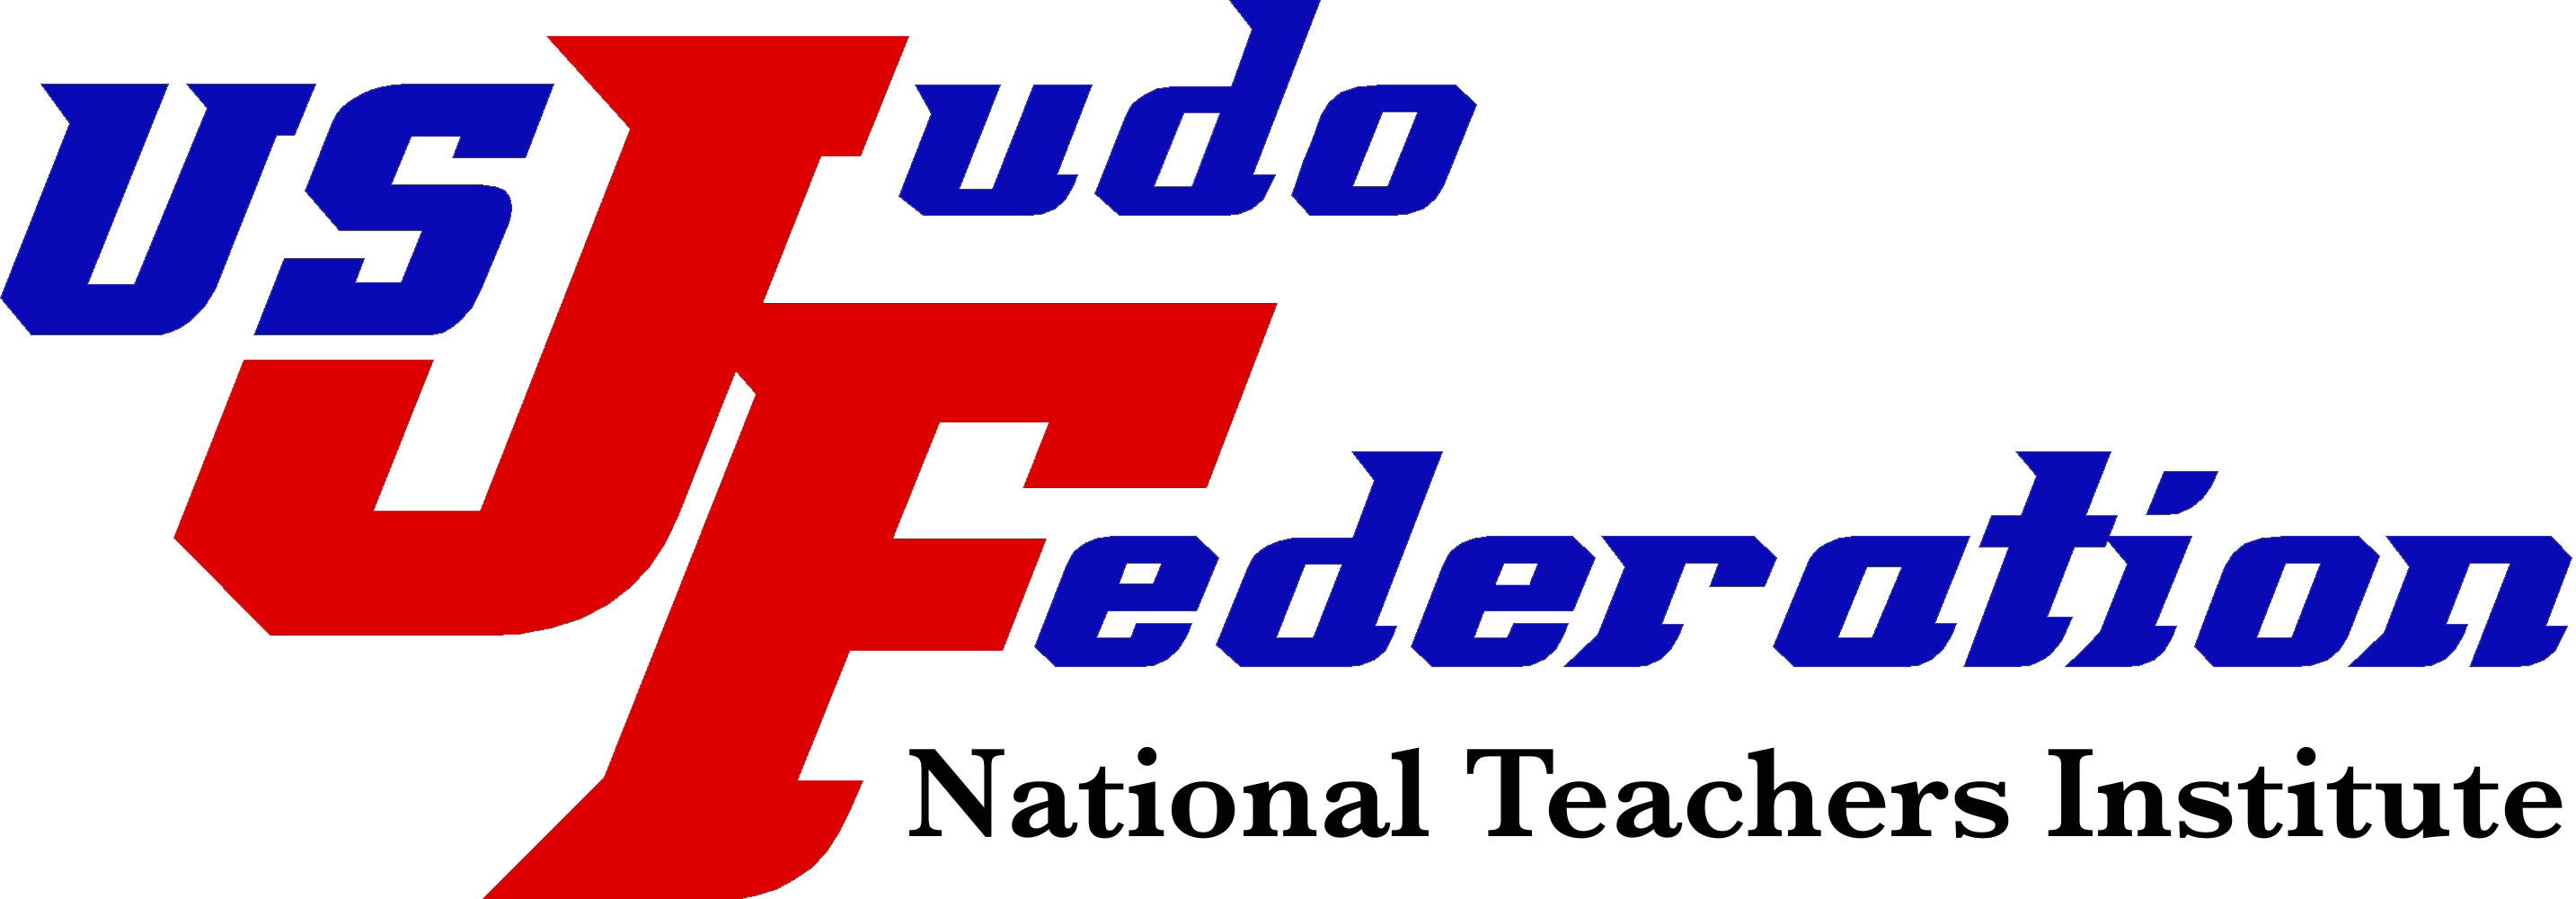 United States Judo Federation Coach